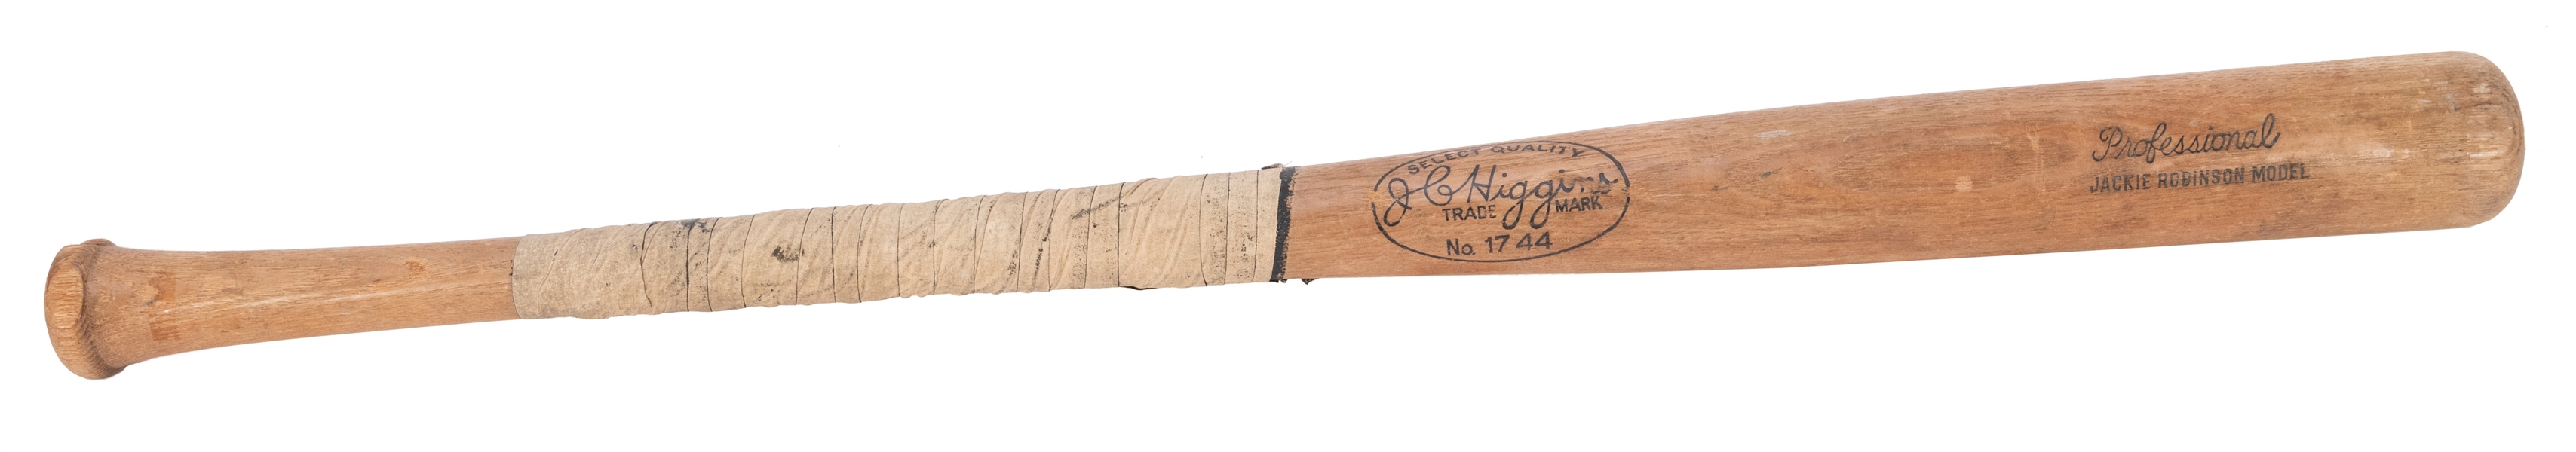  Jackie Robinson Model Baseball Bat. Higgins No. 1744. Lengt...